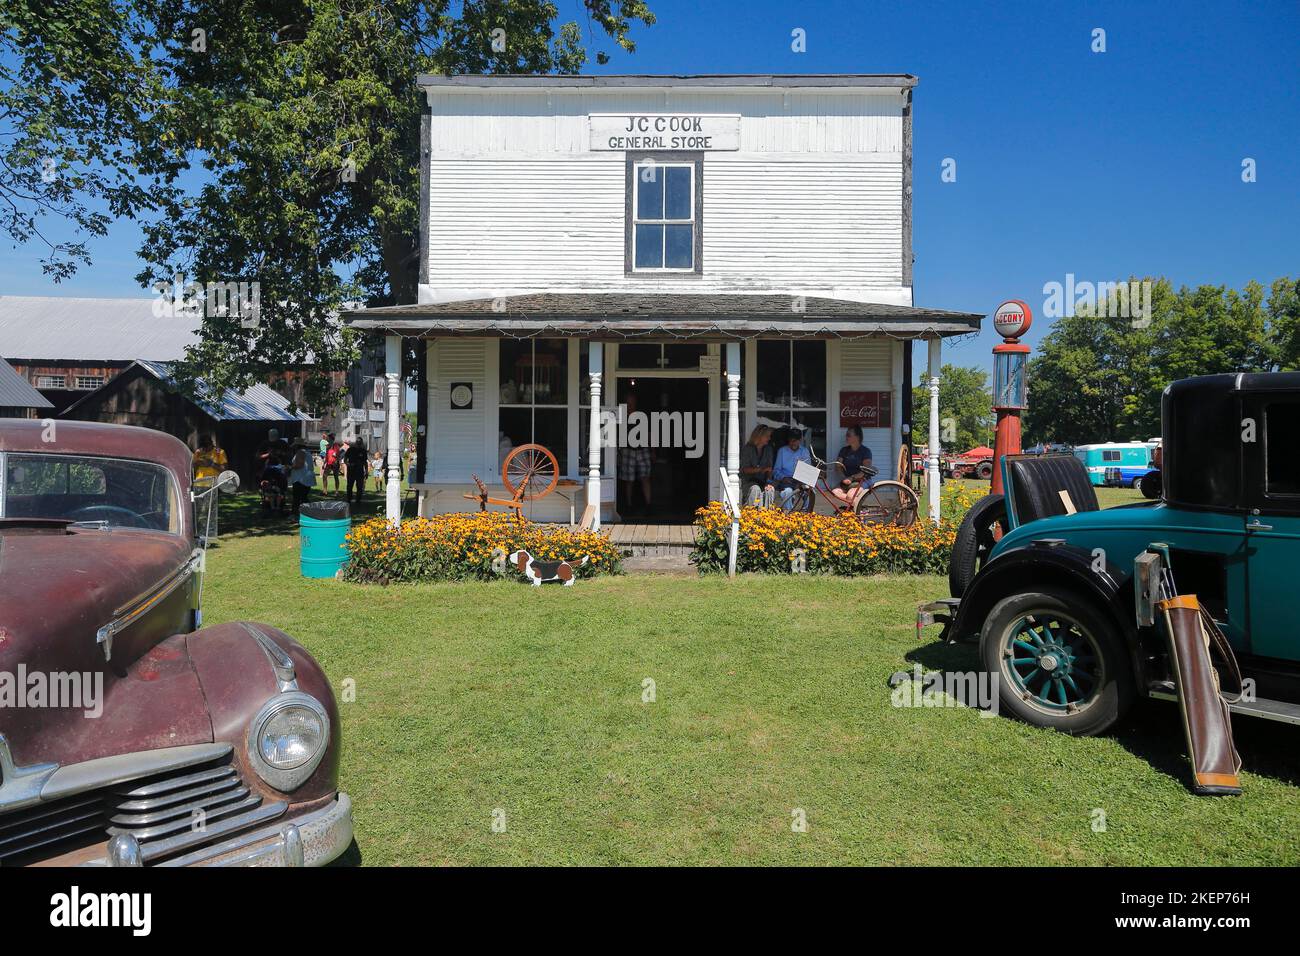 Vintage cars, farmland antique event, Province of Quebec, Canada Stock Photo